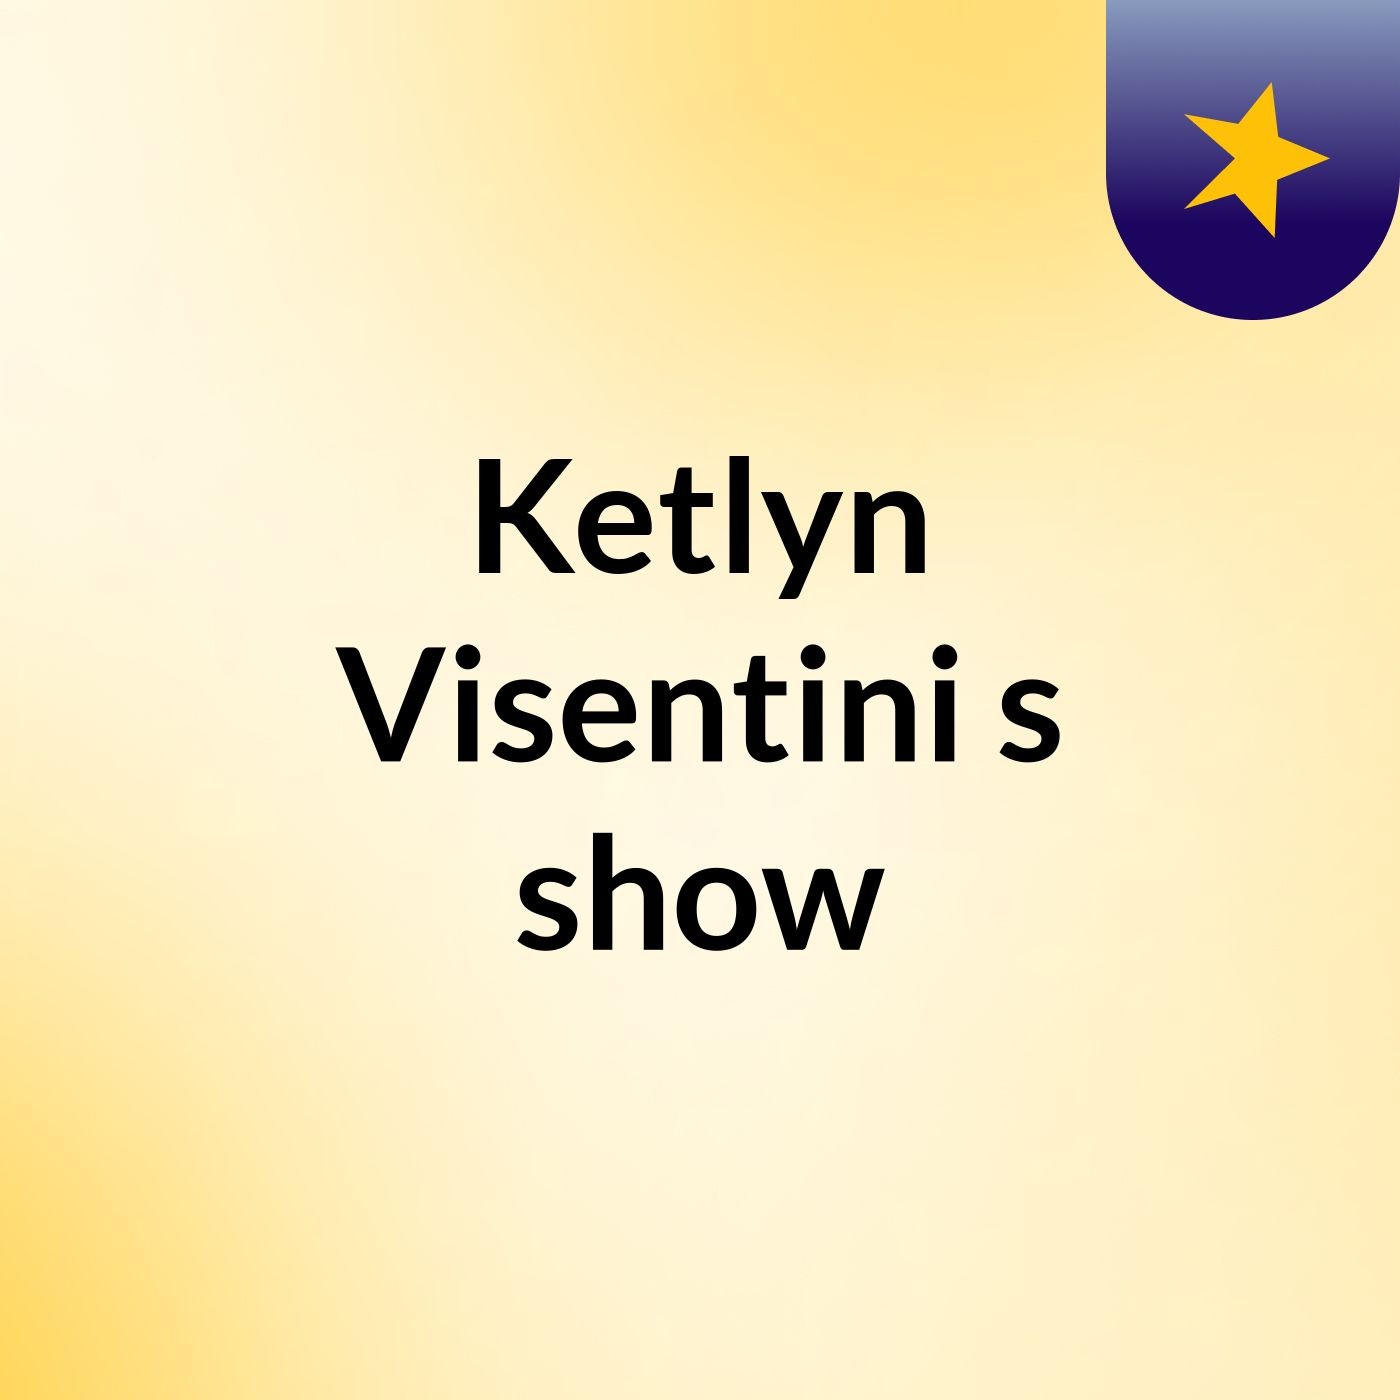 Ketlyn Visentini's show